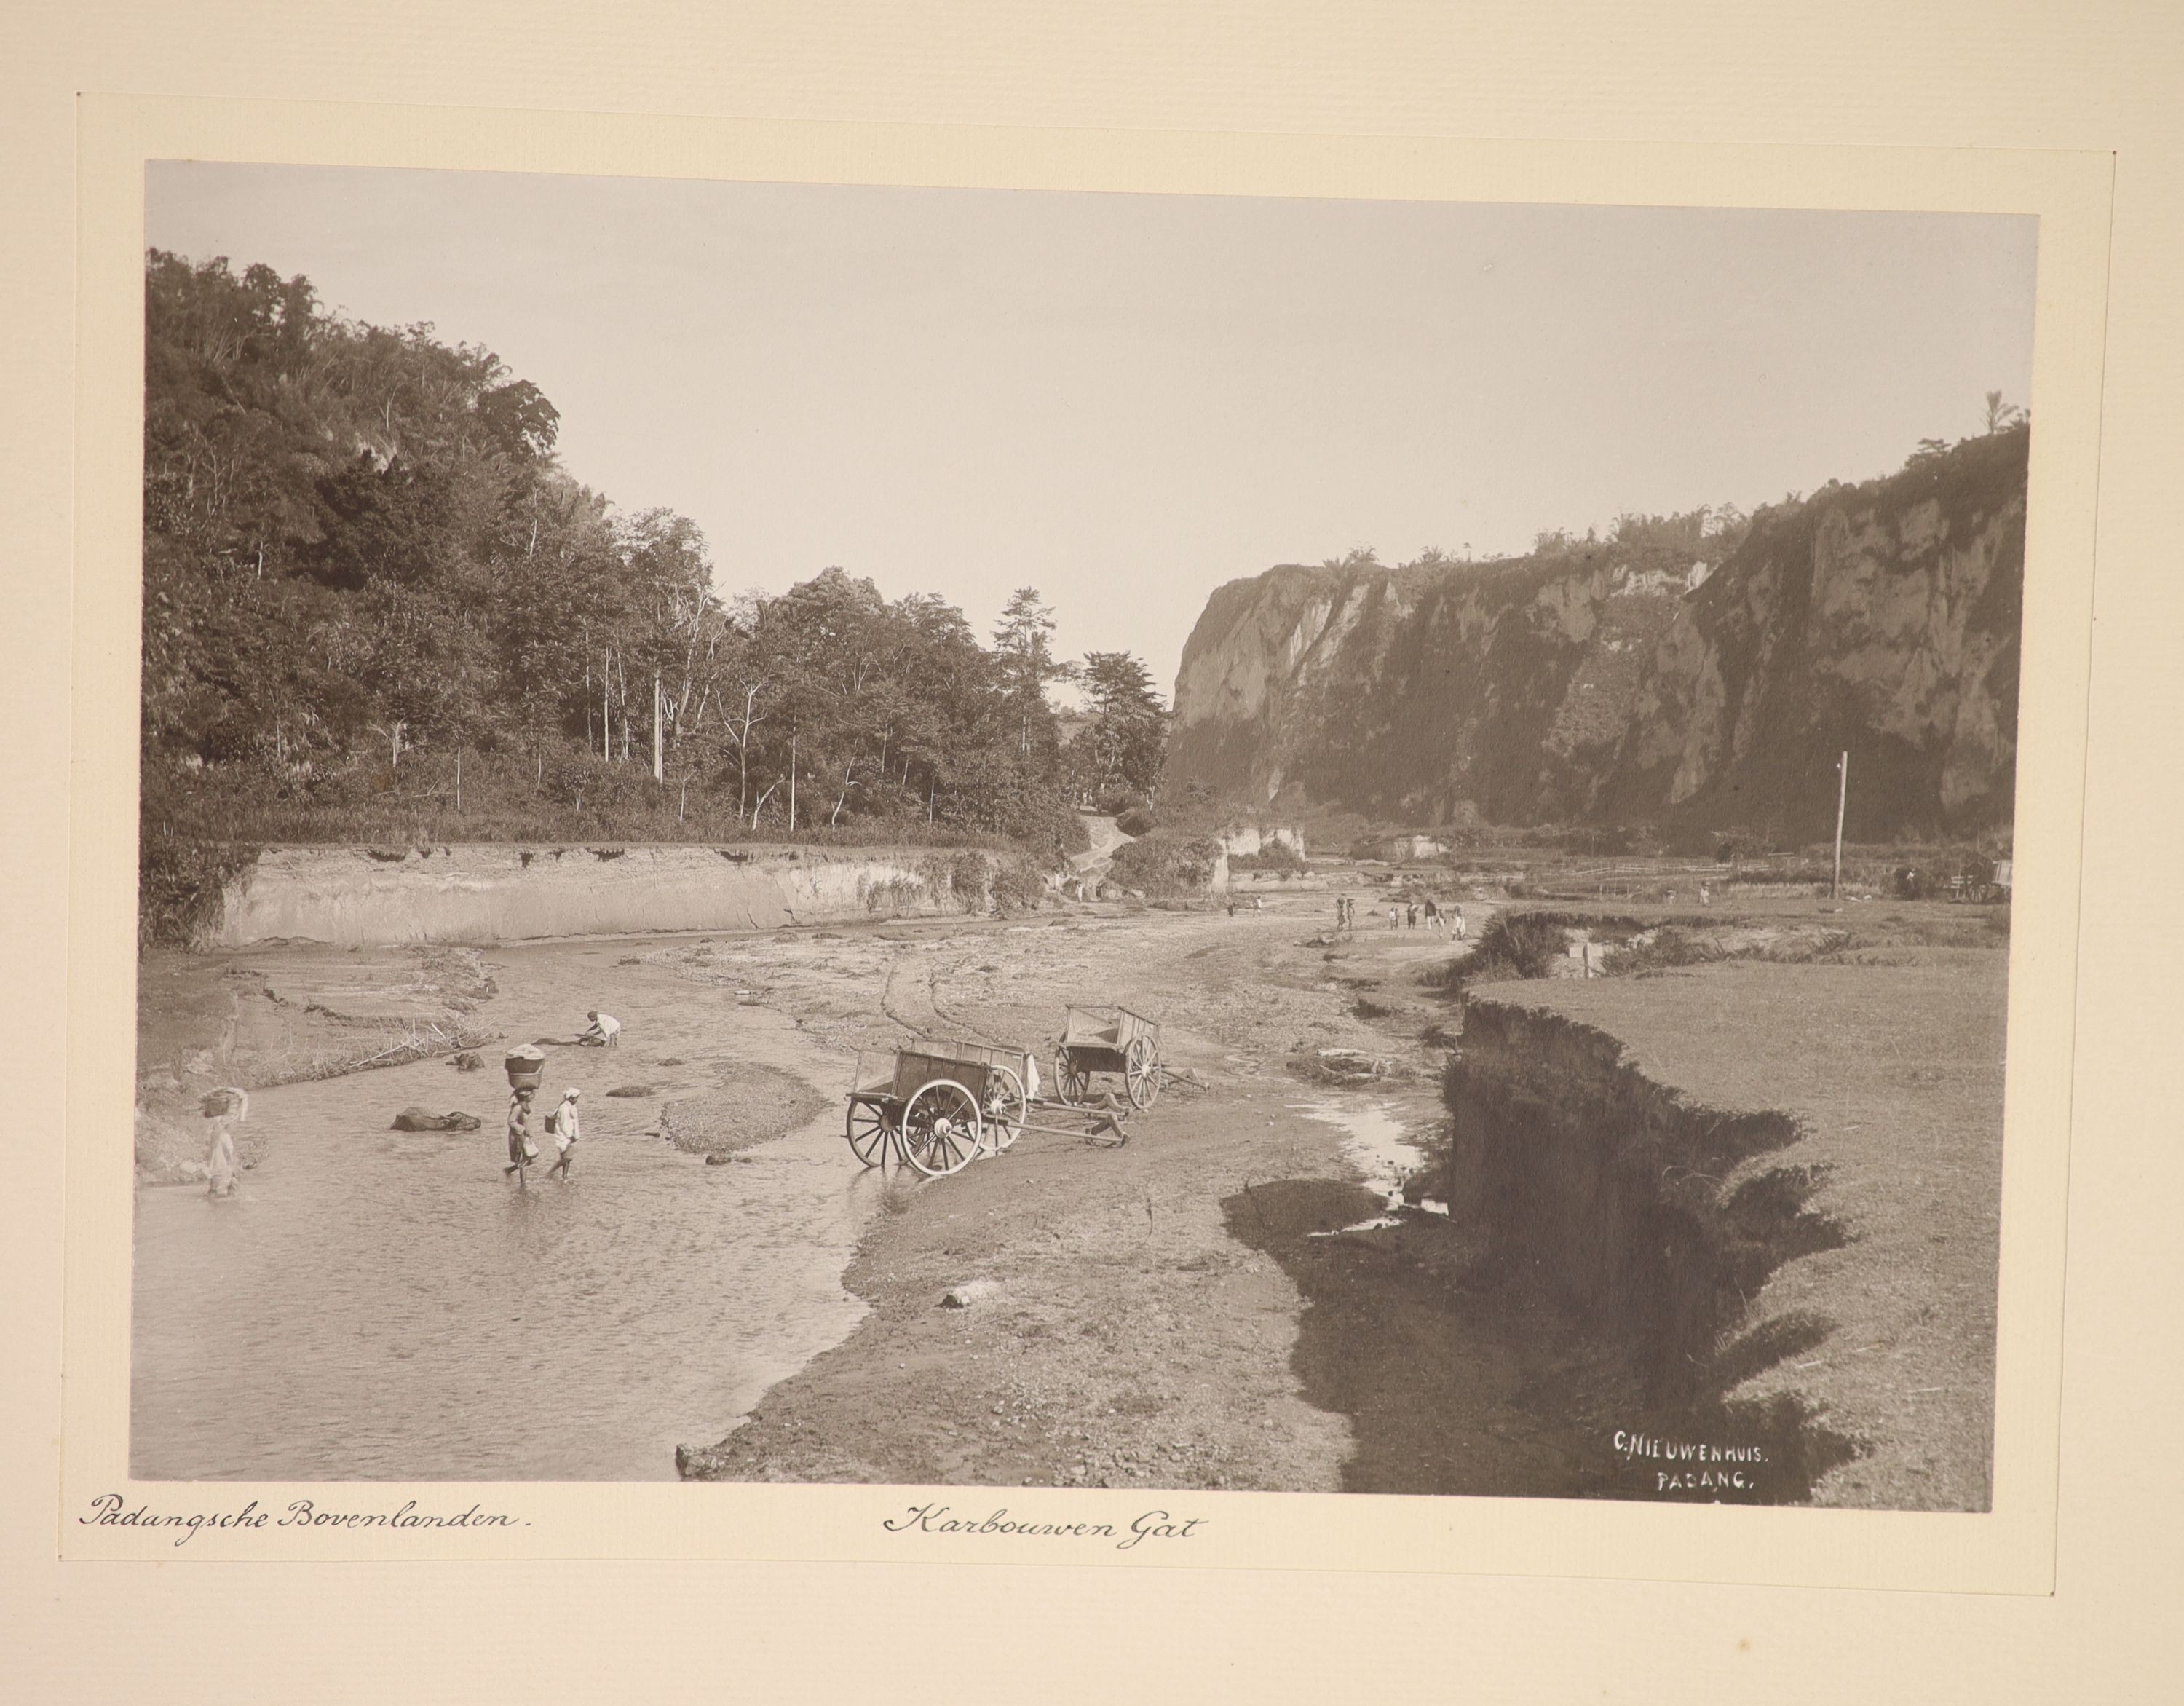 Dutch East Indies (Indonesia), An album of photographs of Batavia, including Buitenzorg, Garona, Baroboedoer (Borobudur temple), Soerabaja, Semarang, etc., c.1900-10, (2)